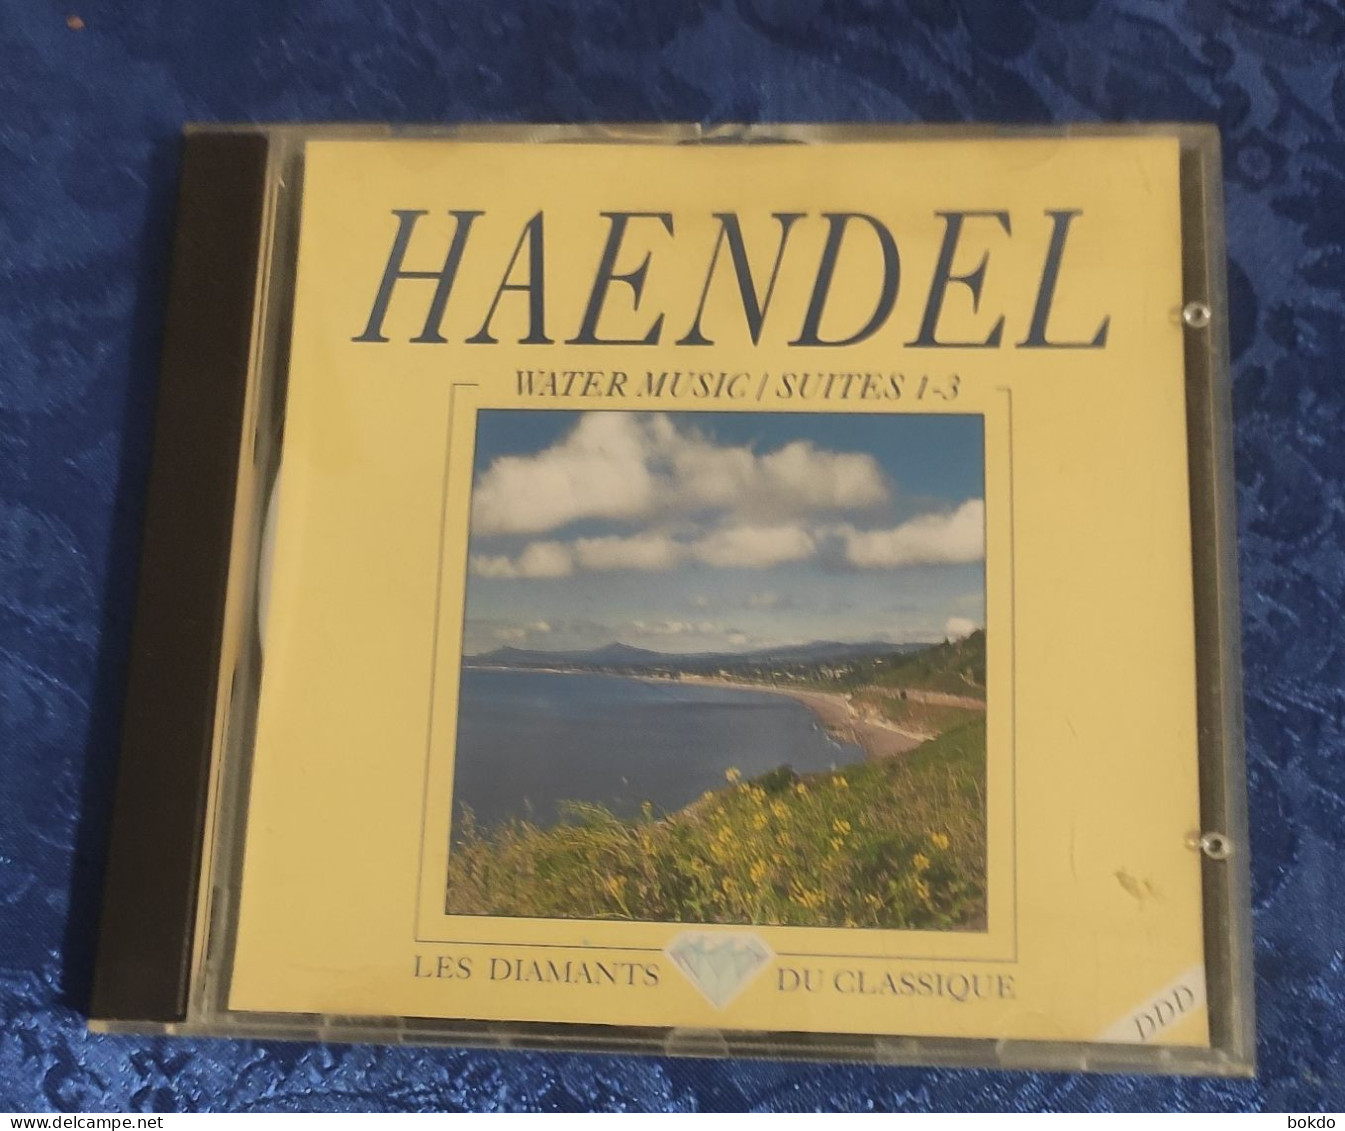 HEABDEL - Water Music Suites 1-3 - Classical